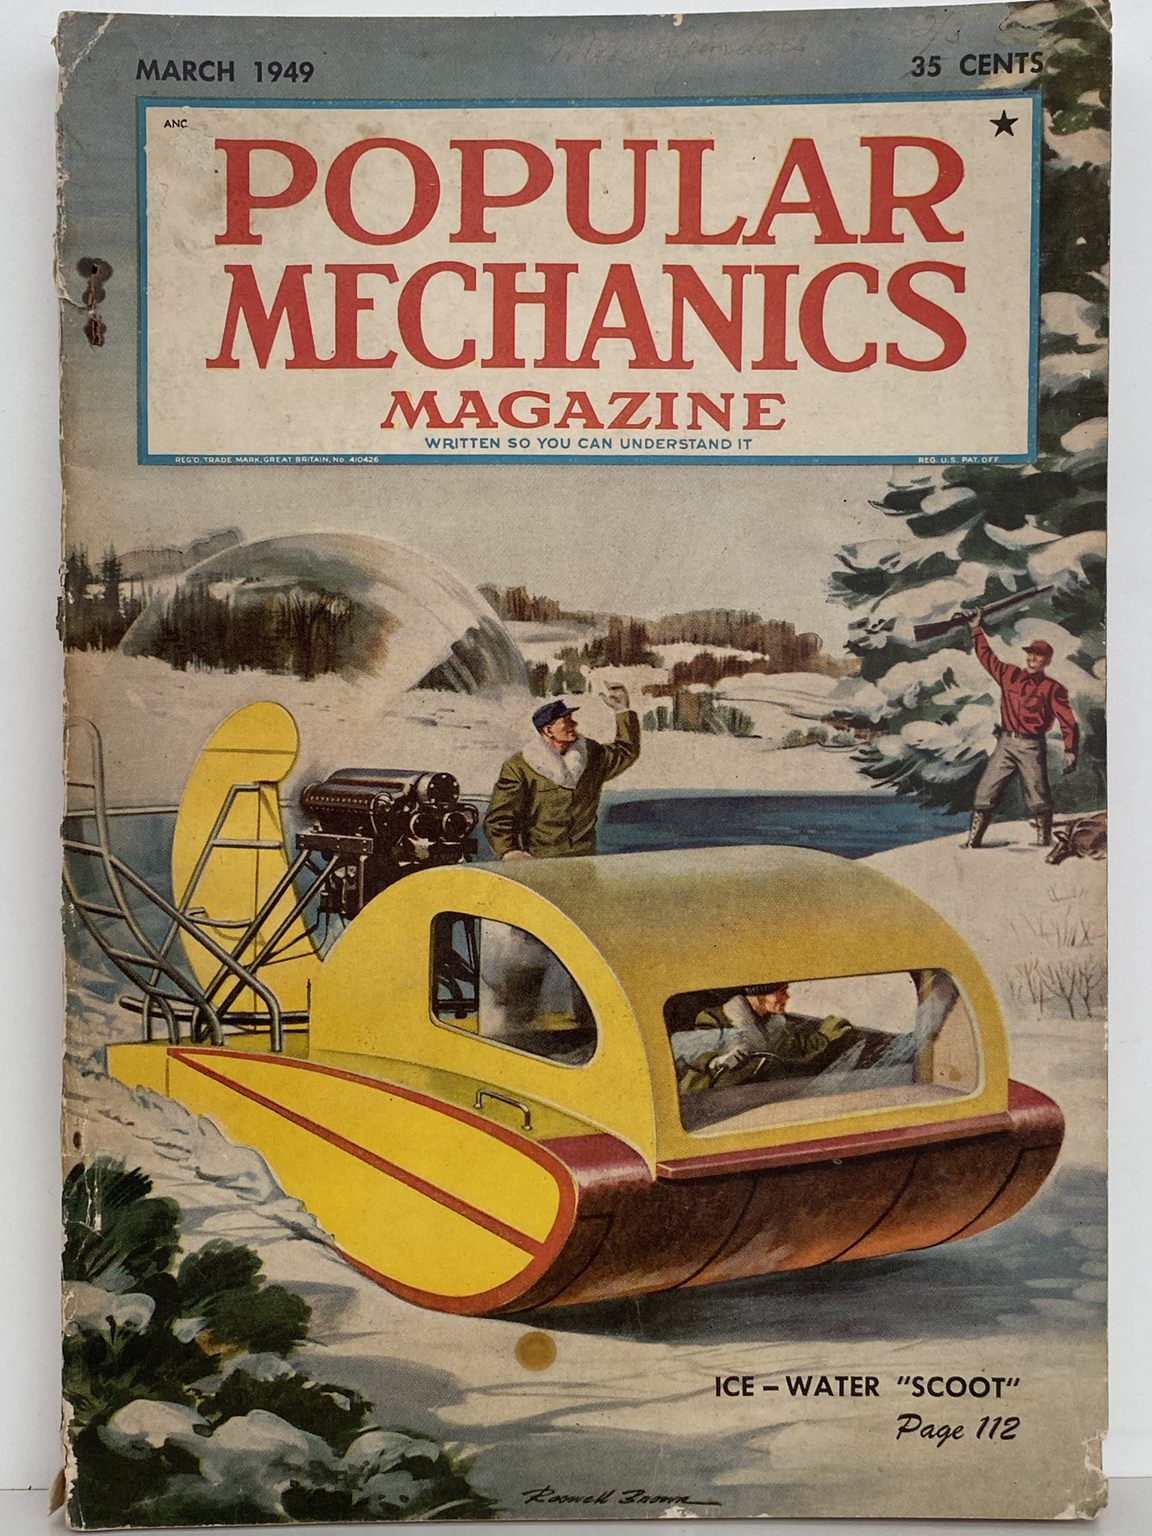 VINTAGE MAGAZINE: Popular Mechanics - Vol. 91, No. 3 - March 1949